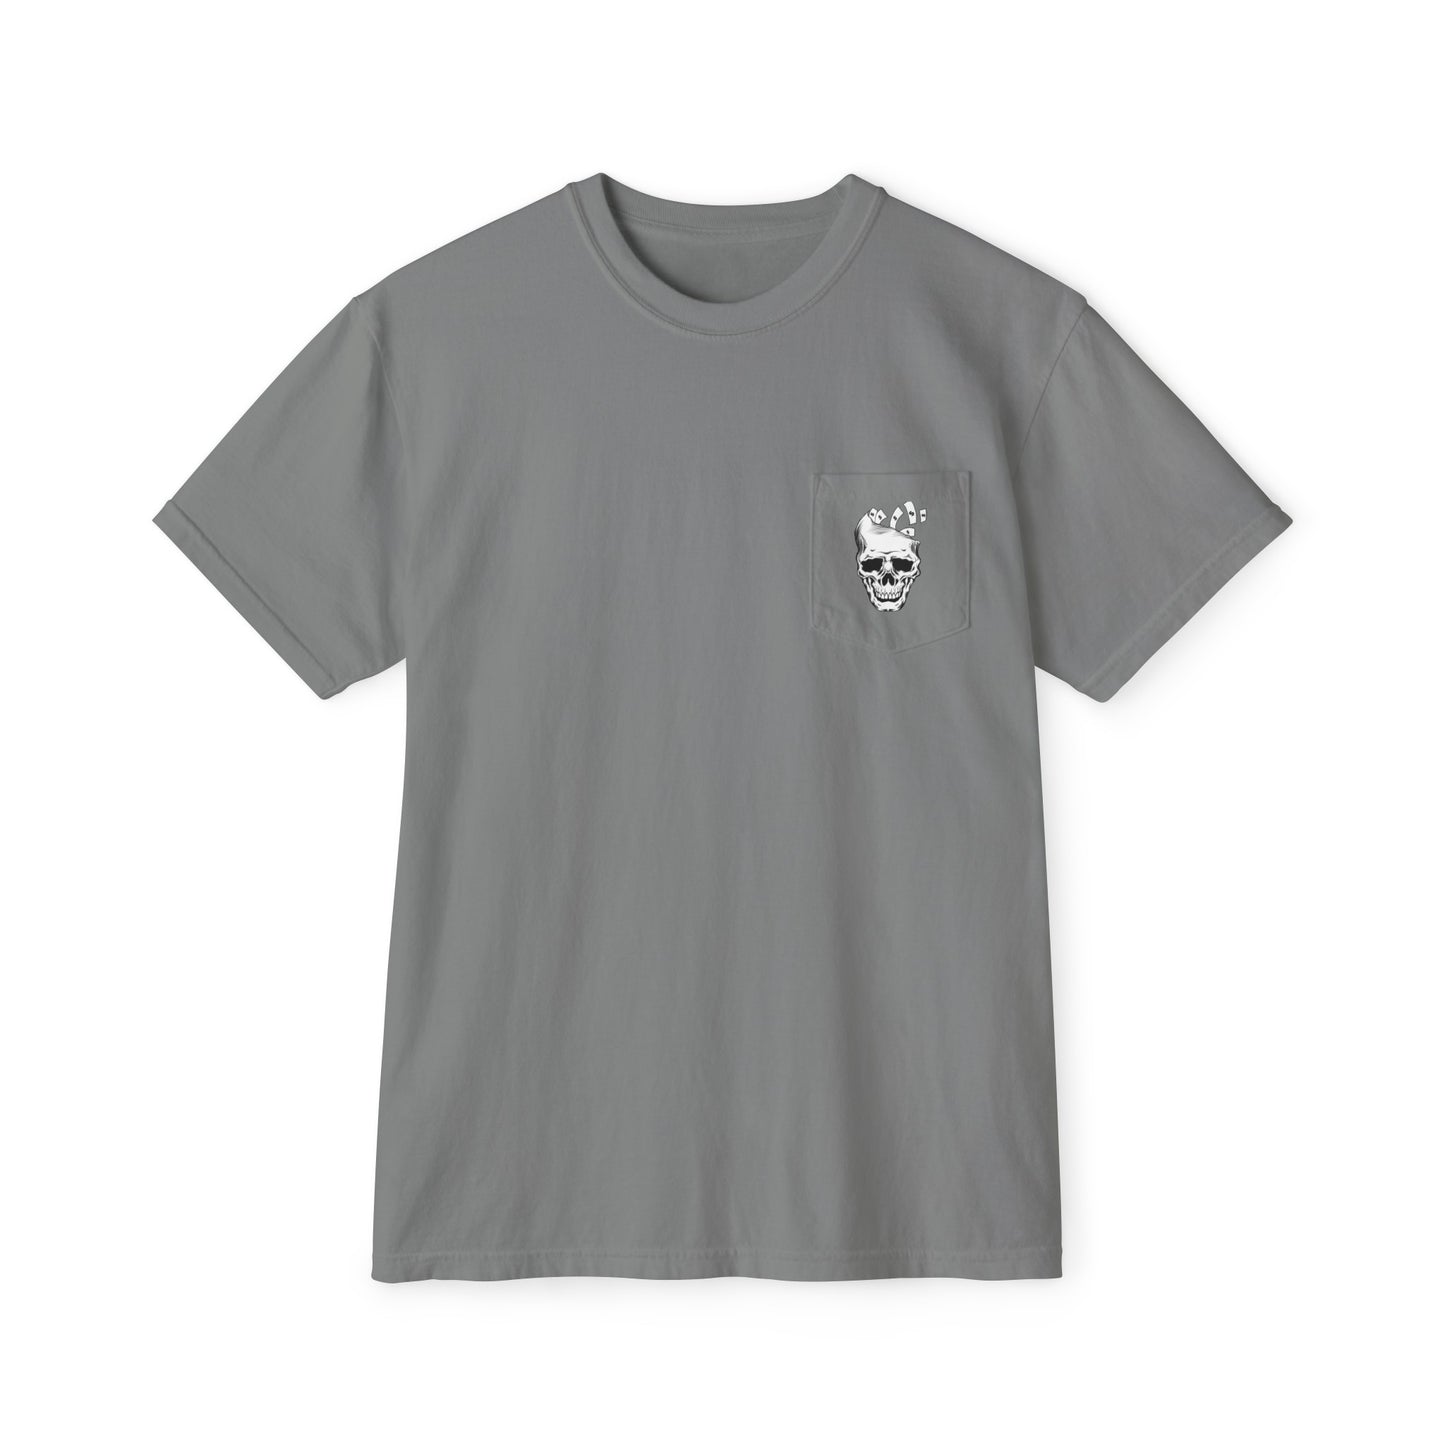 FCCM Unisex Garment-Dyed Pocket T-Shirt